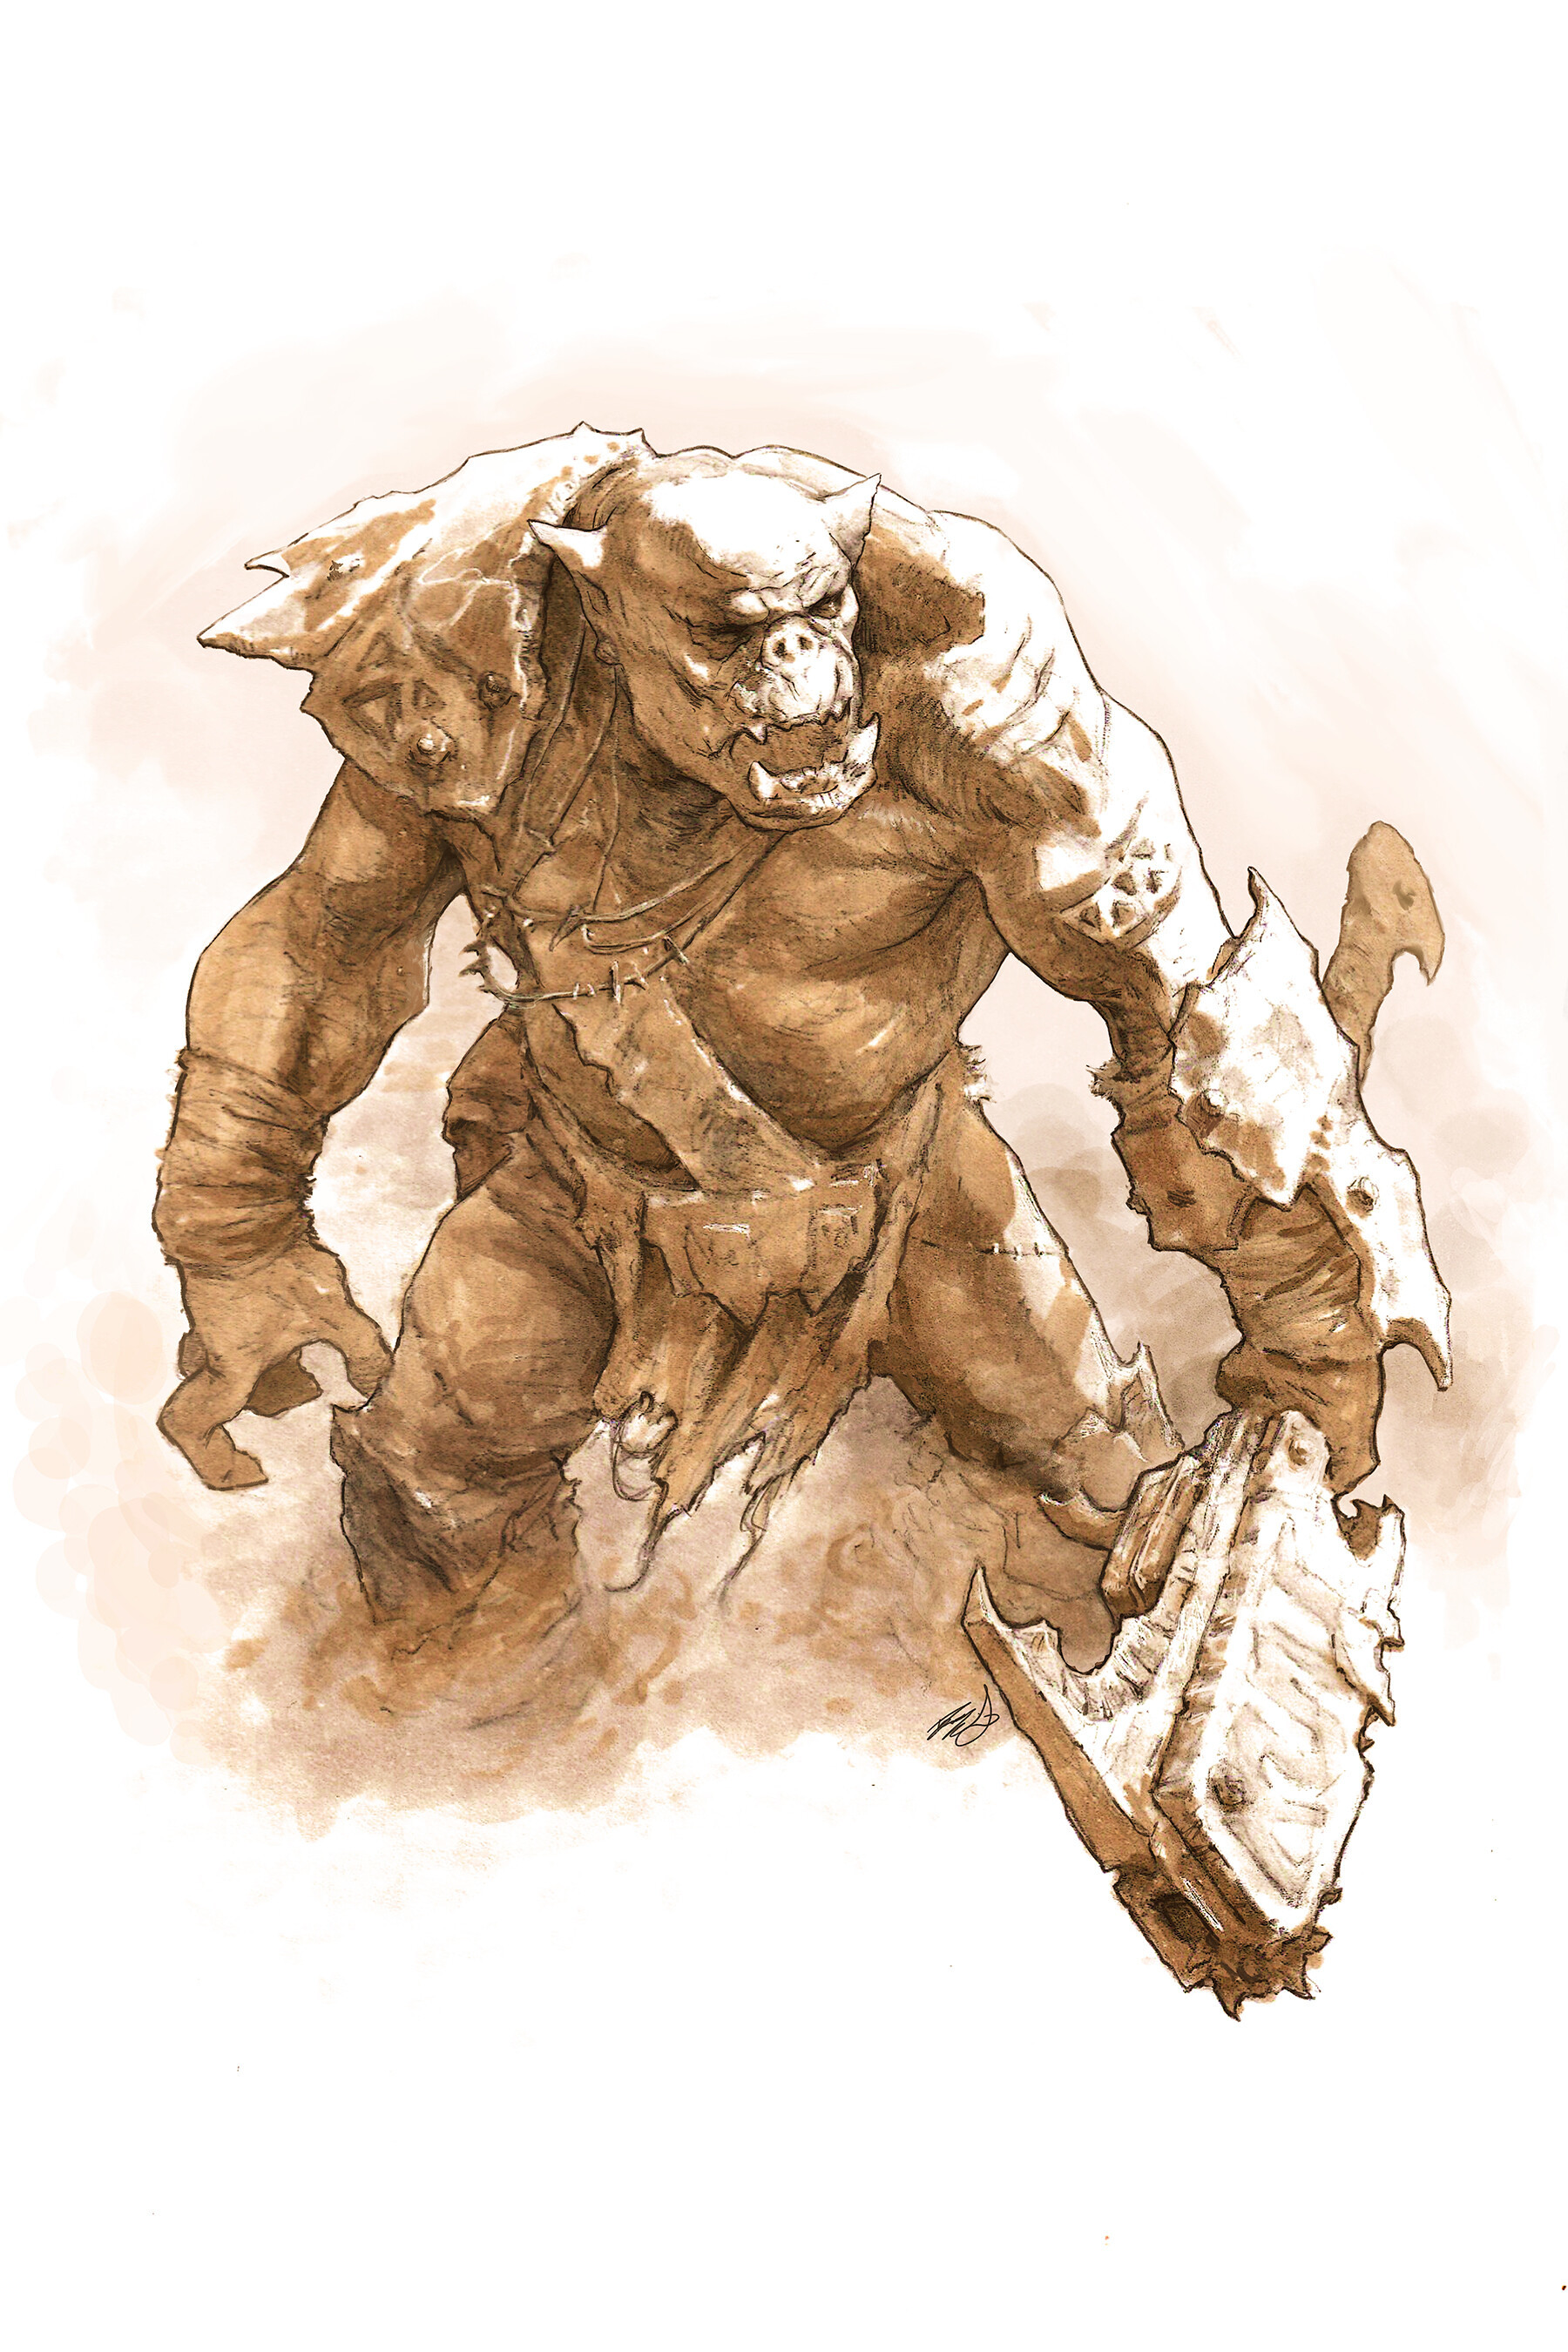 Eldar Autarch & Orks by Dane Larocque - Warhammer 40k, Wh Art, Eldar, Orcs, Grot, Xenos, Longpost